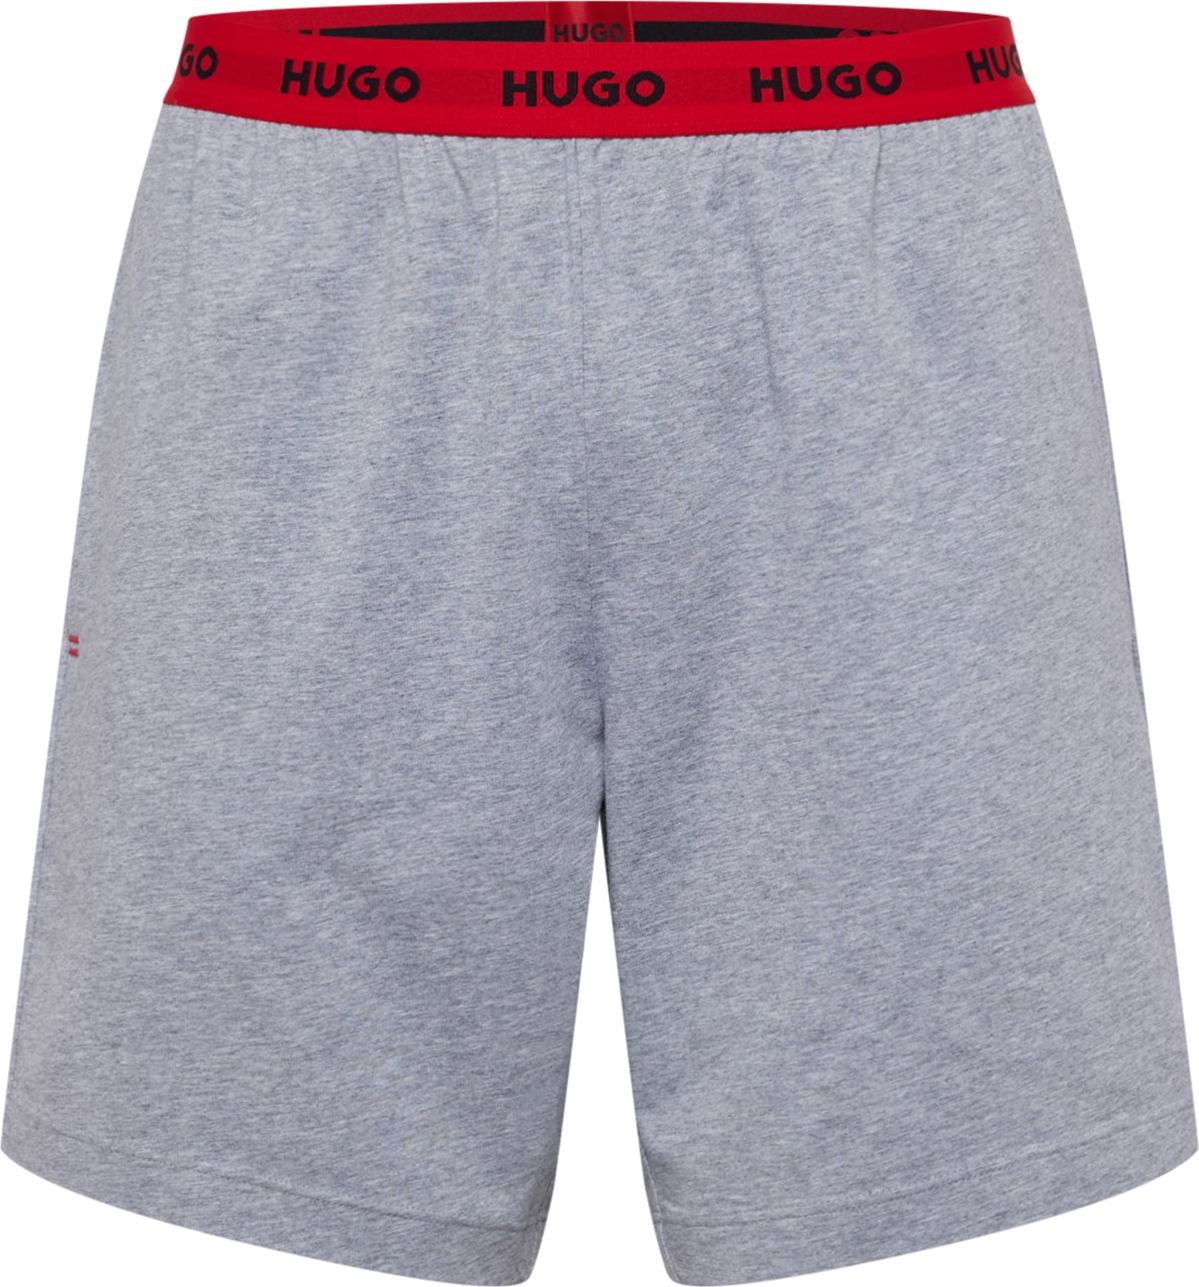 HUGO Pyžamové kalhoty 'Linked' šedá / červená / černá